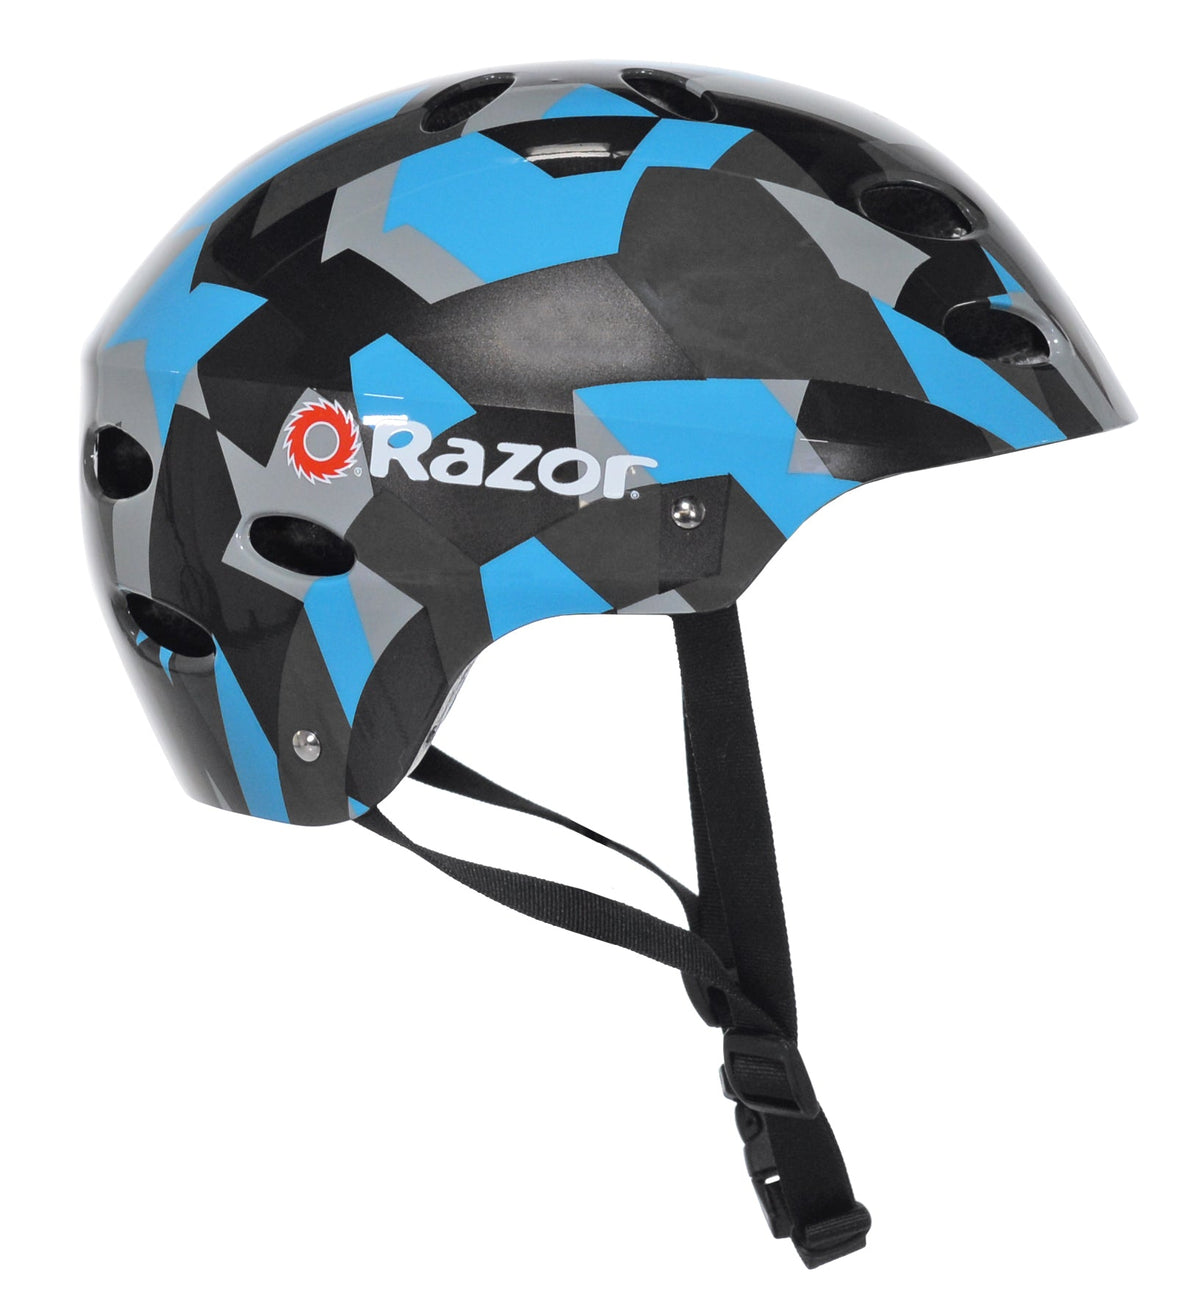 Razor® Multi-Sport Youth Helmet | For Ages 8+